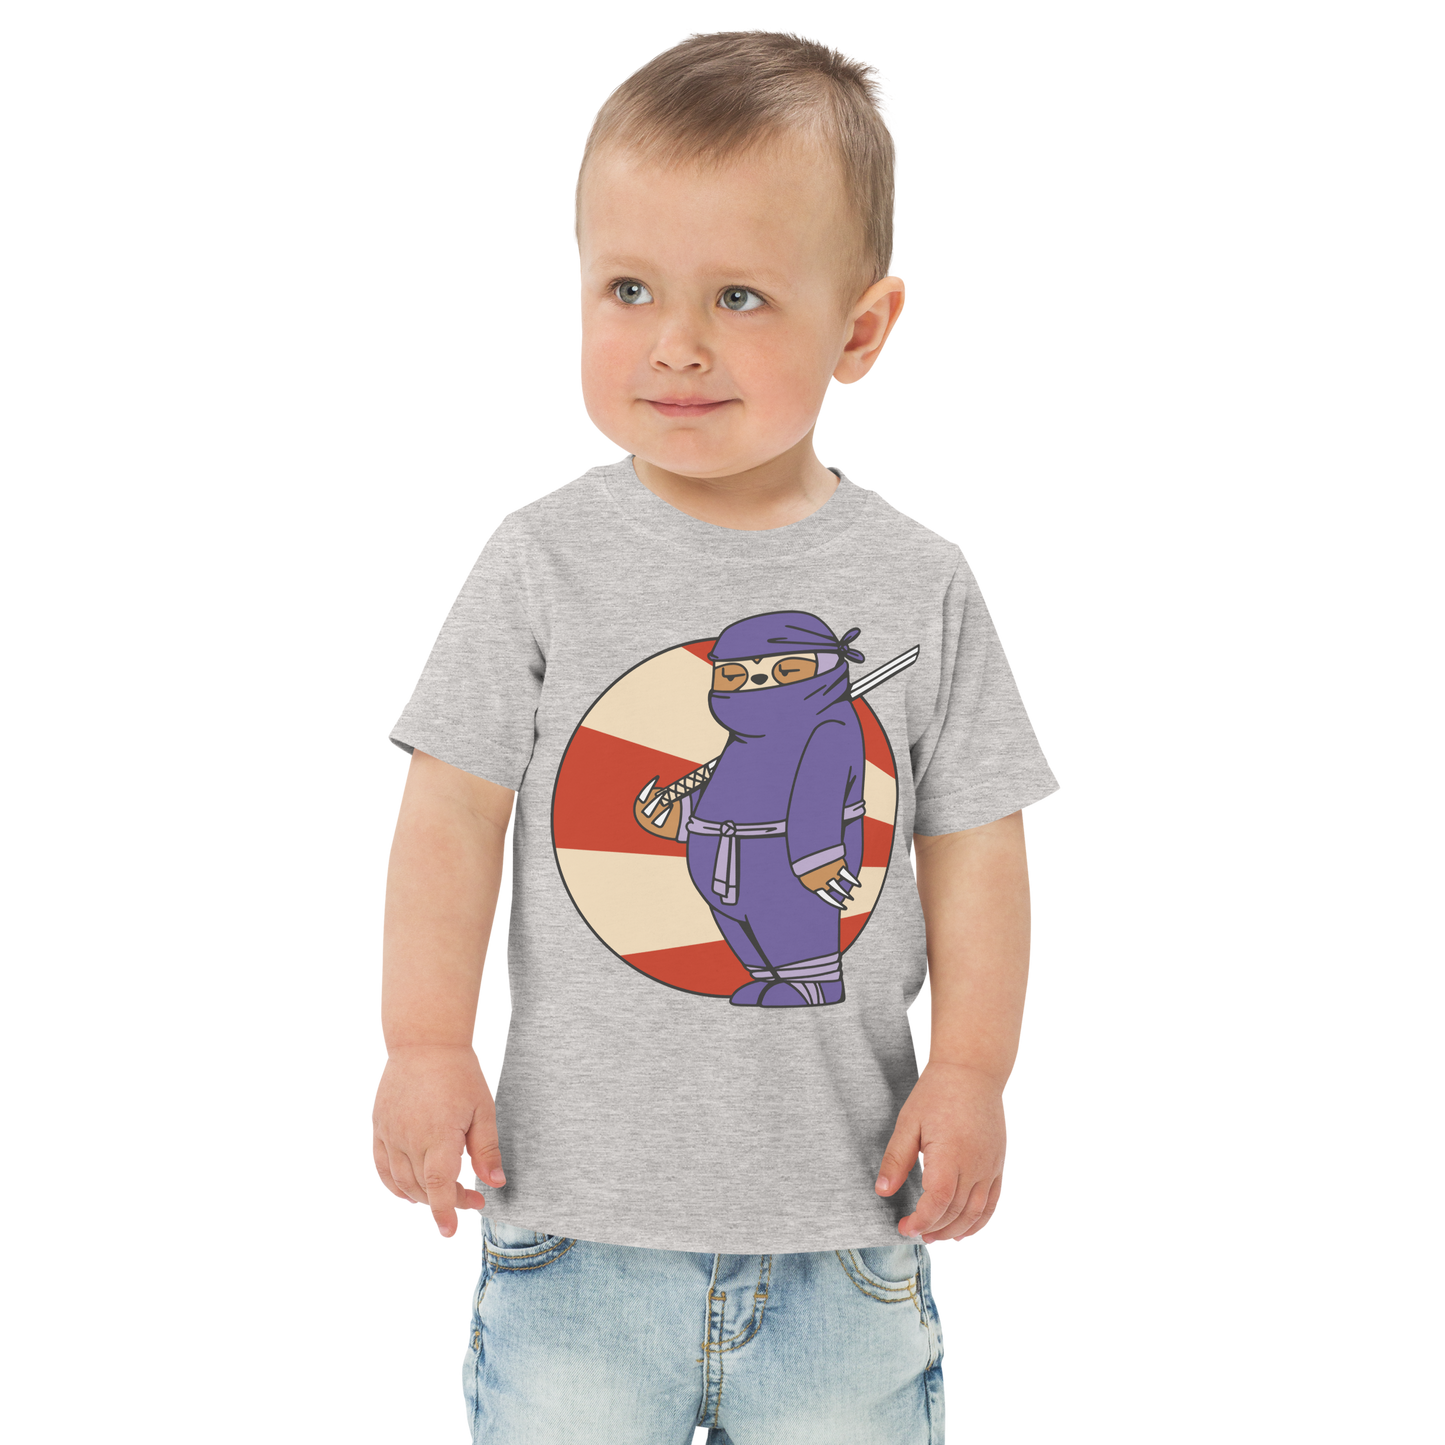 Lazy ninja sloth | Toddler jersey t-shirt